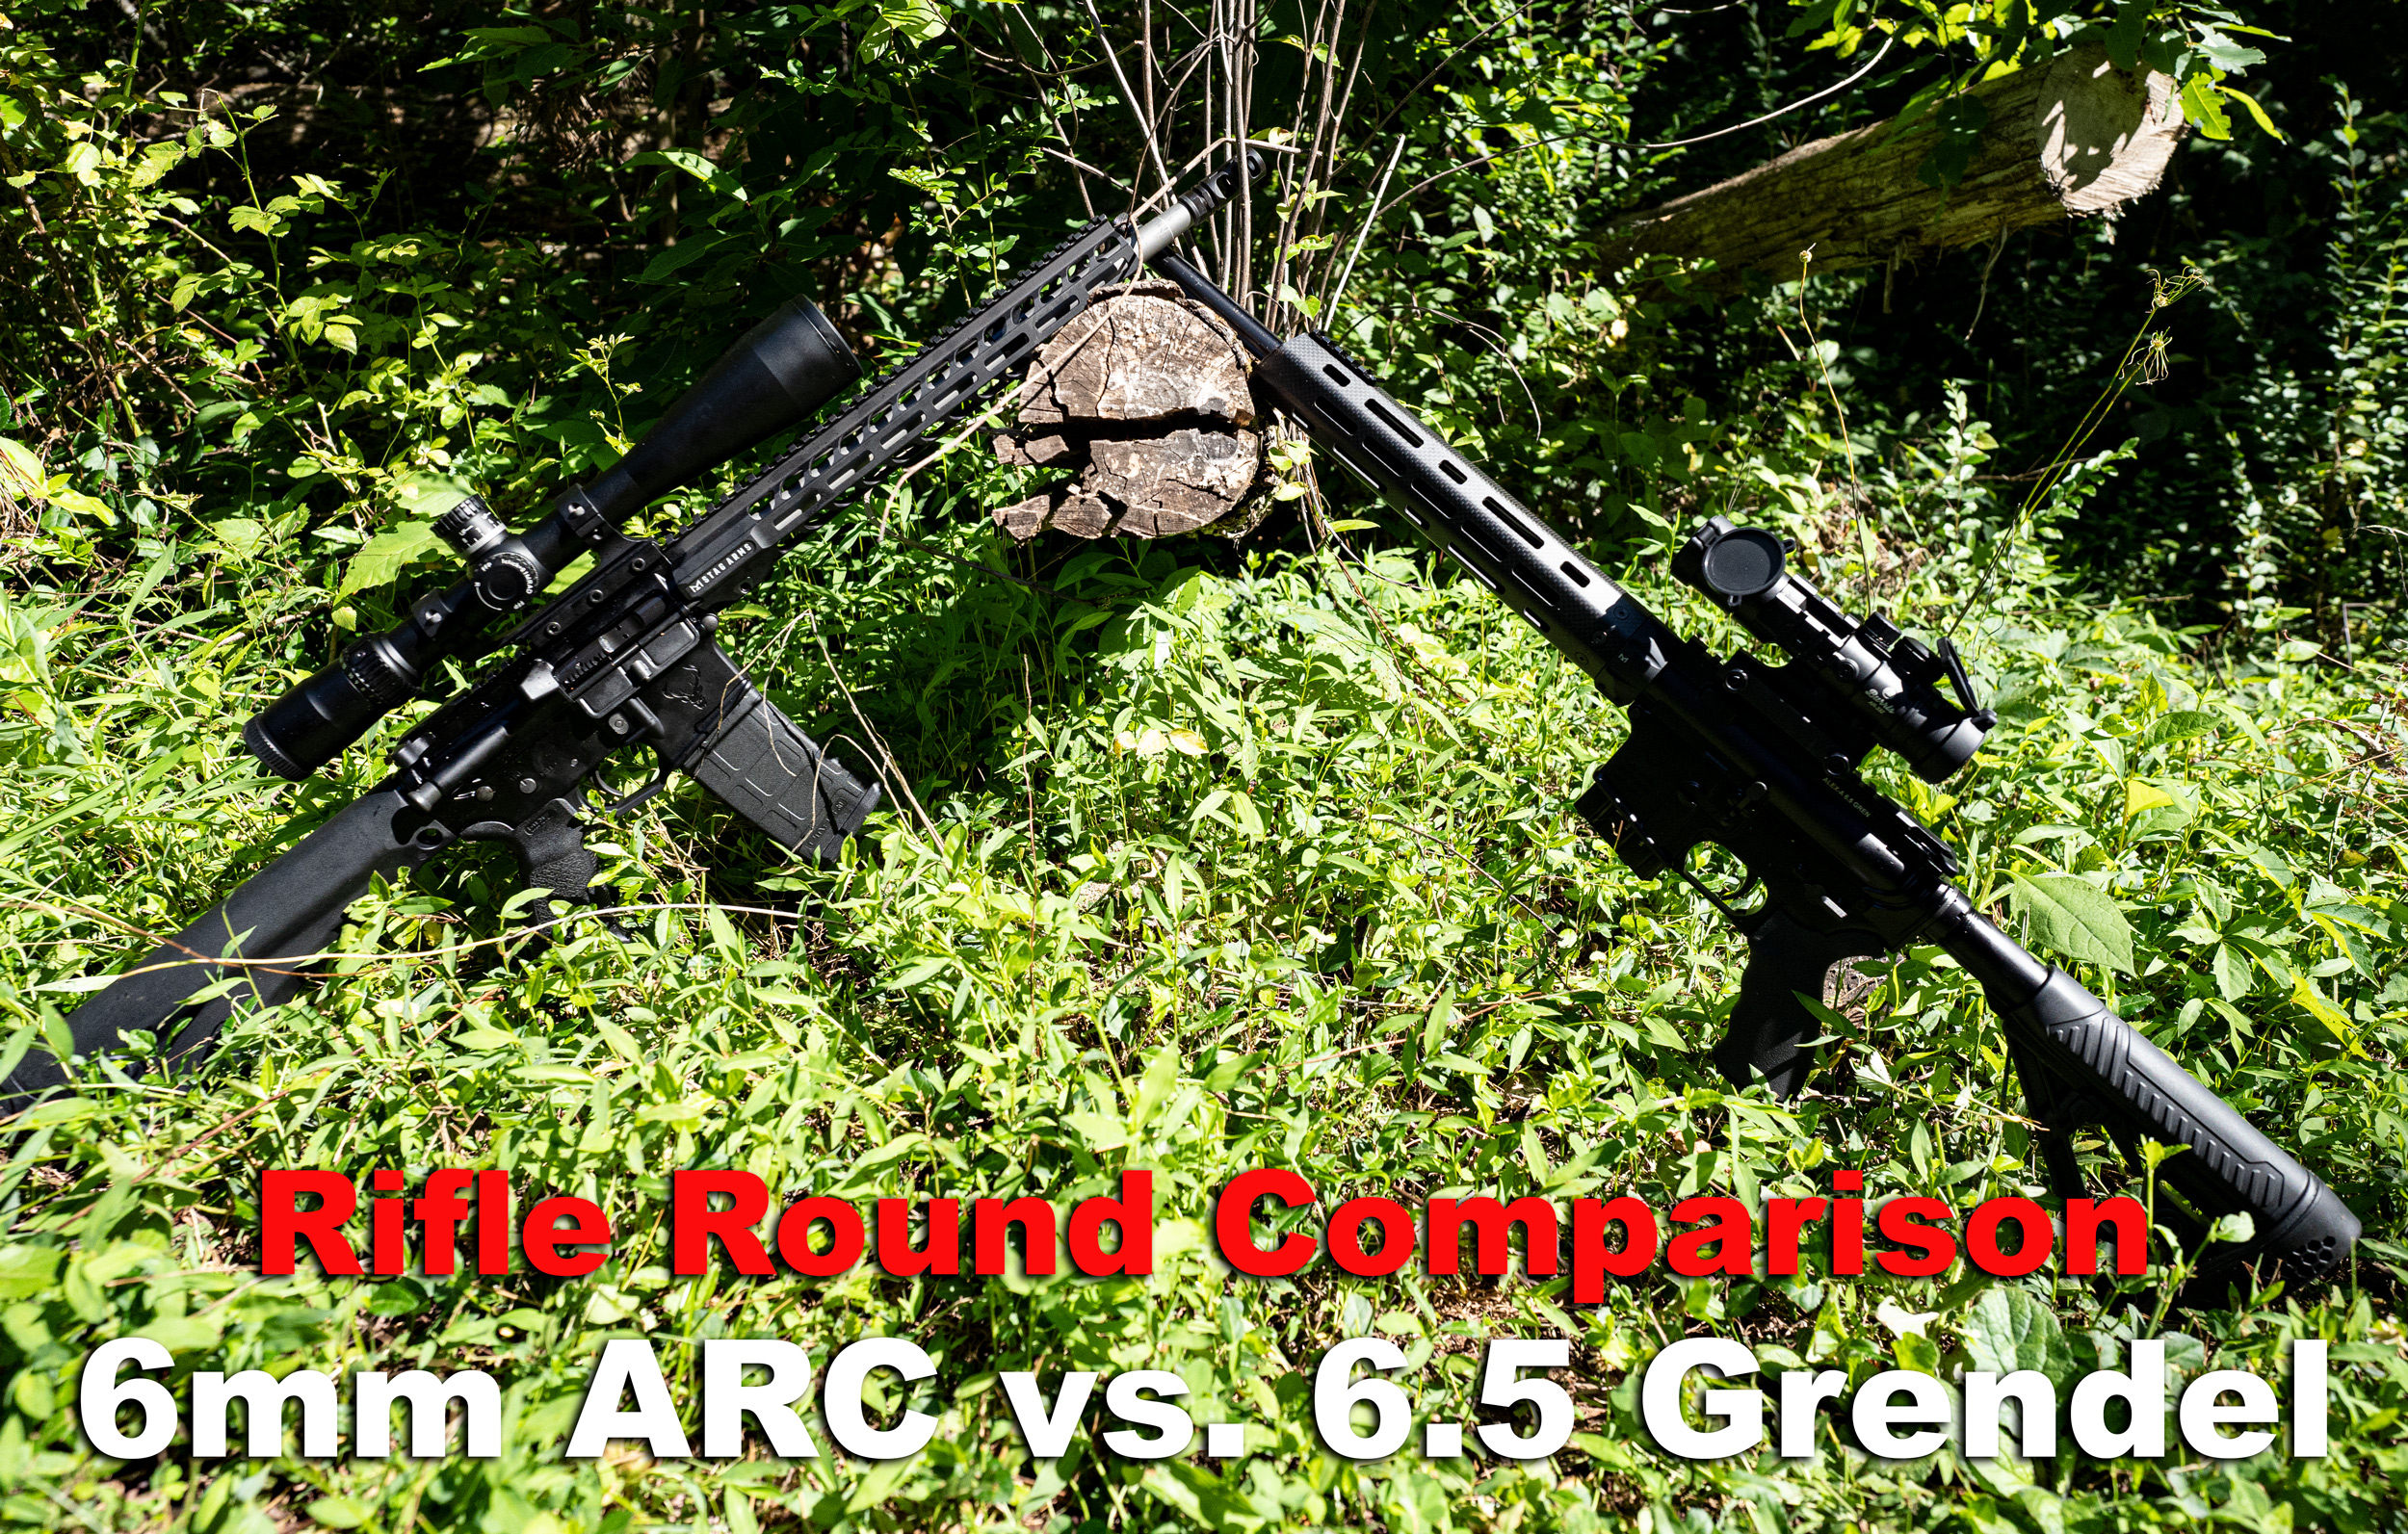 6mm ARC vs 6.5 Grendel rifles side by side at a shooting range